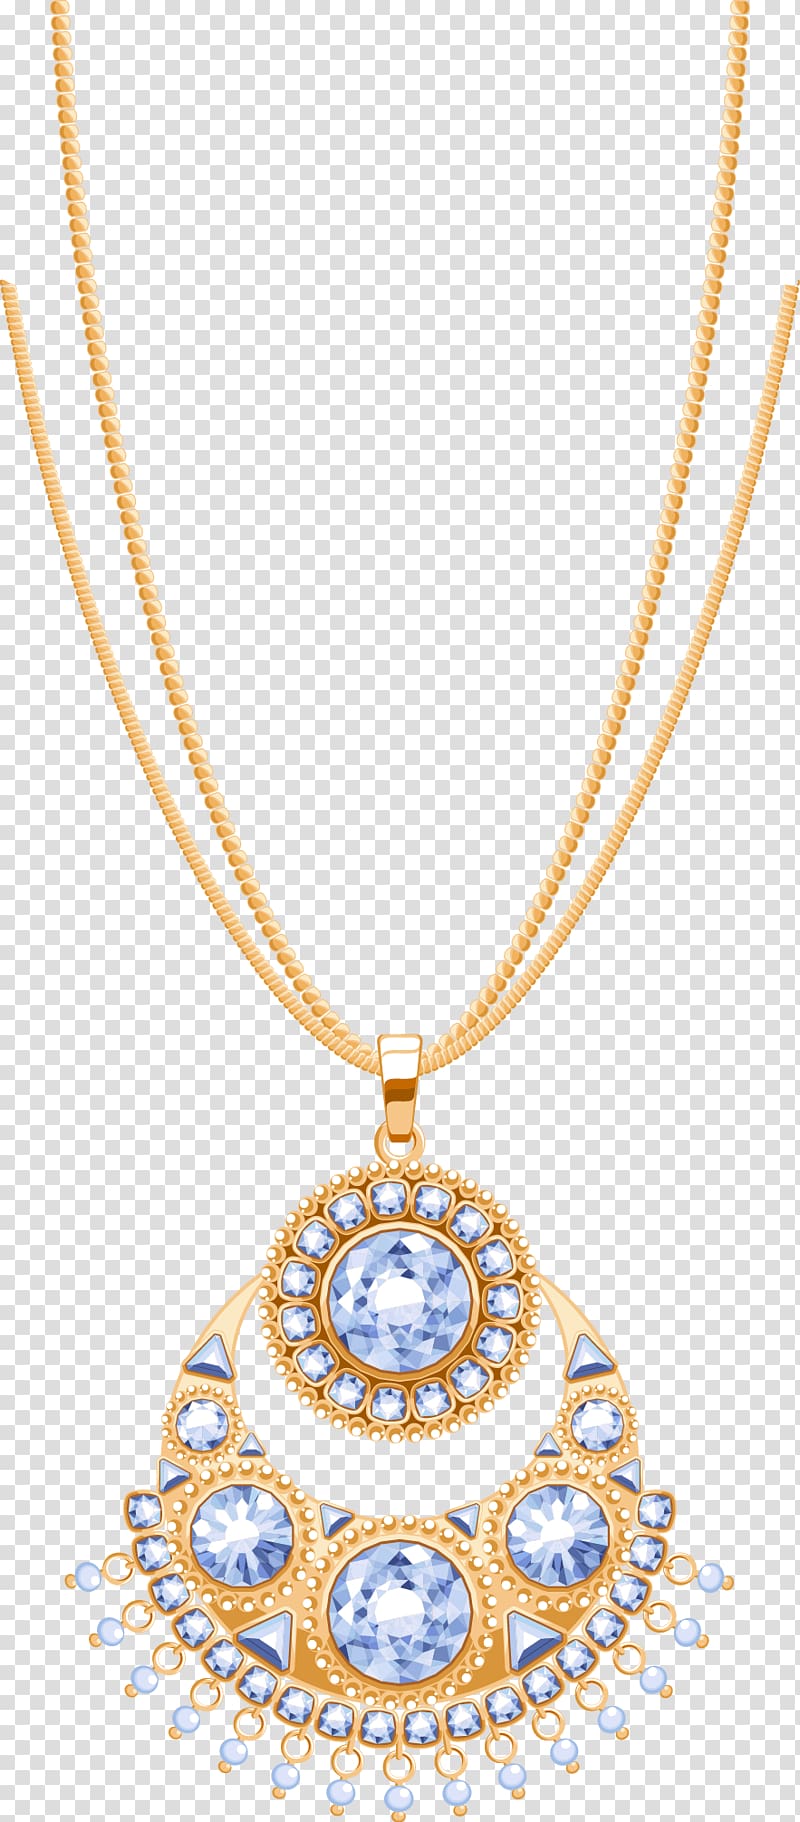 Jewellery Necklace Locket Diamond, Dazzling jewelry diamond jewelry transparent background PNG clipart